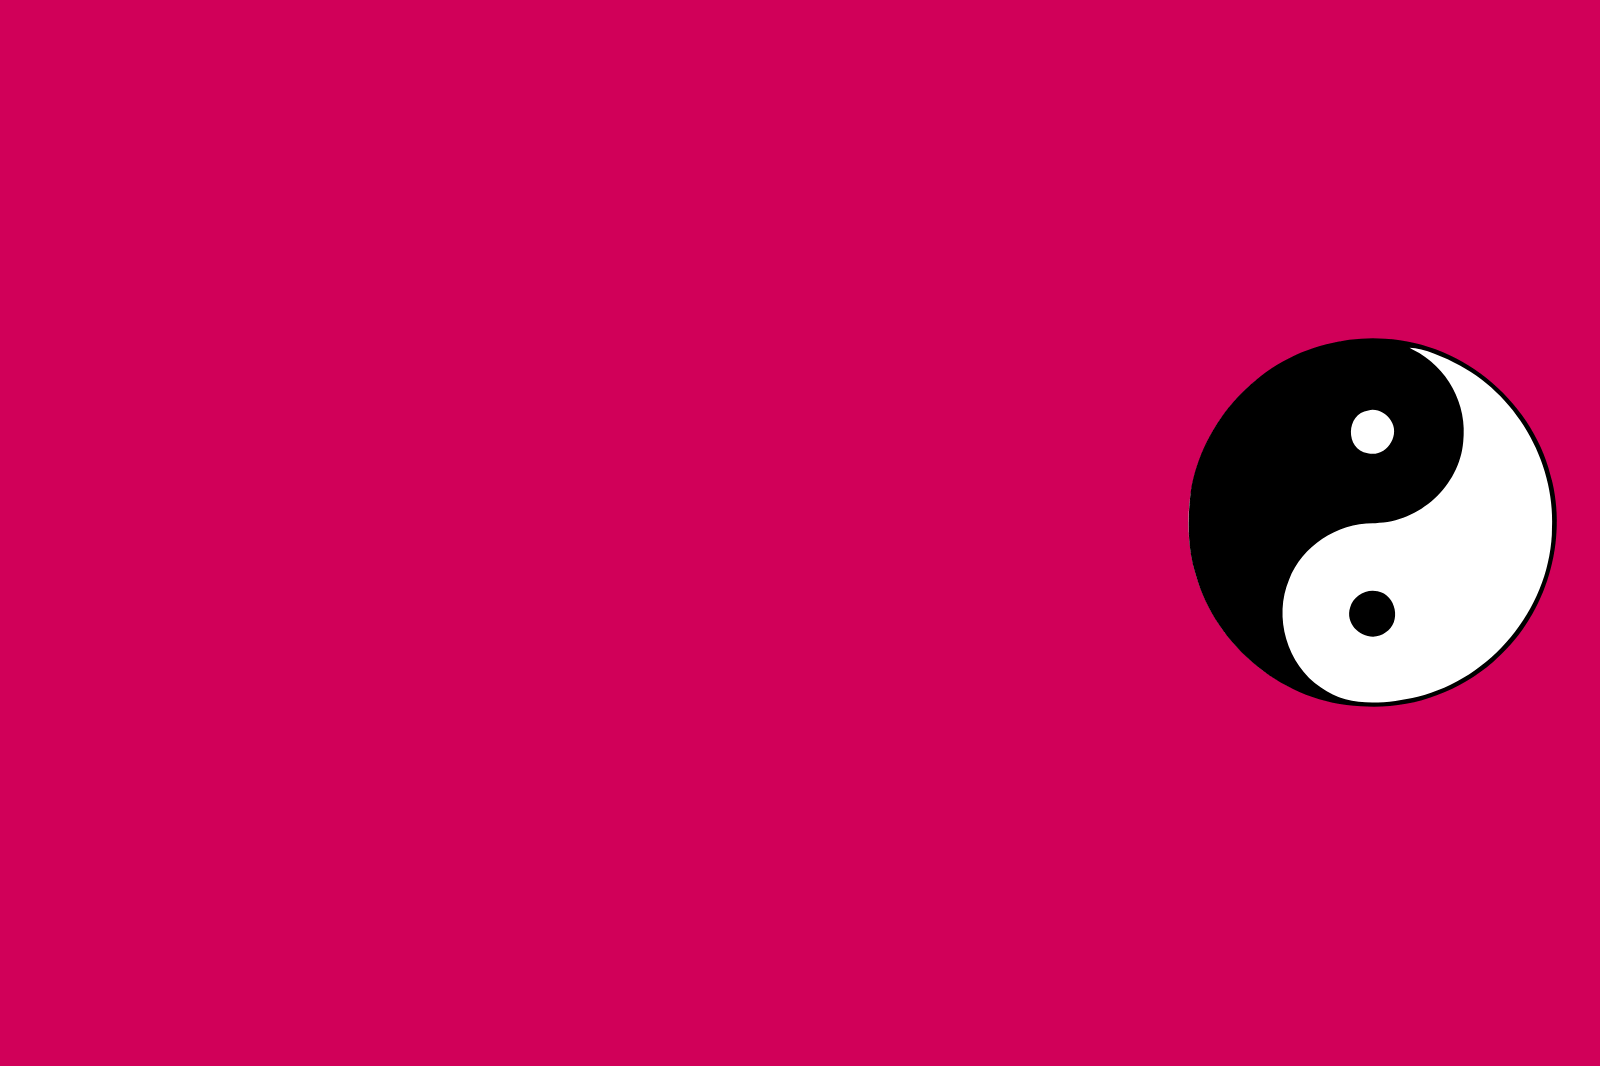 A digital yin-yang symbol on a pink background.